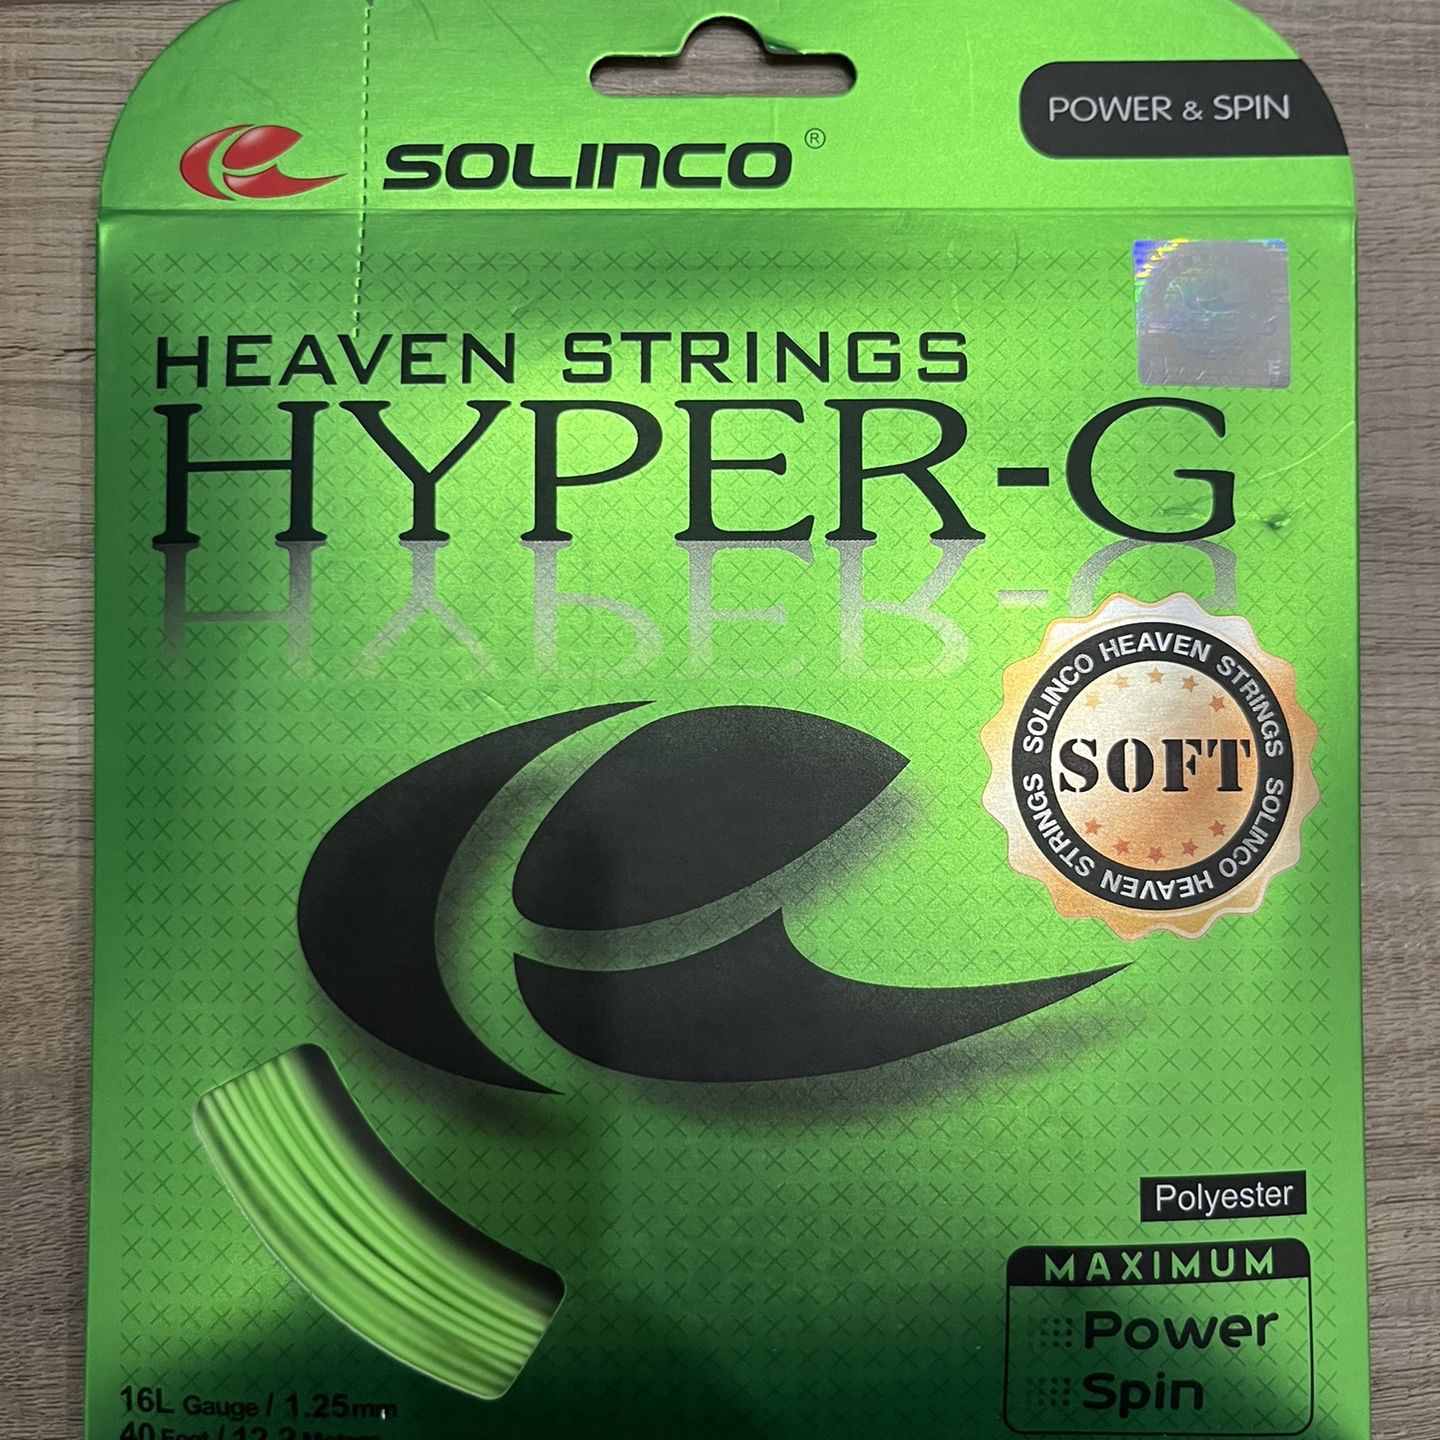 Solinco Hyper-G Soft Tennis Strings 16L Gauge/ 1.25mm for Sale in  Claremont, CA - OfferUp